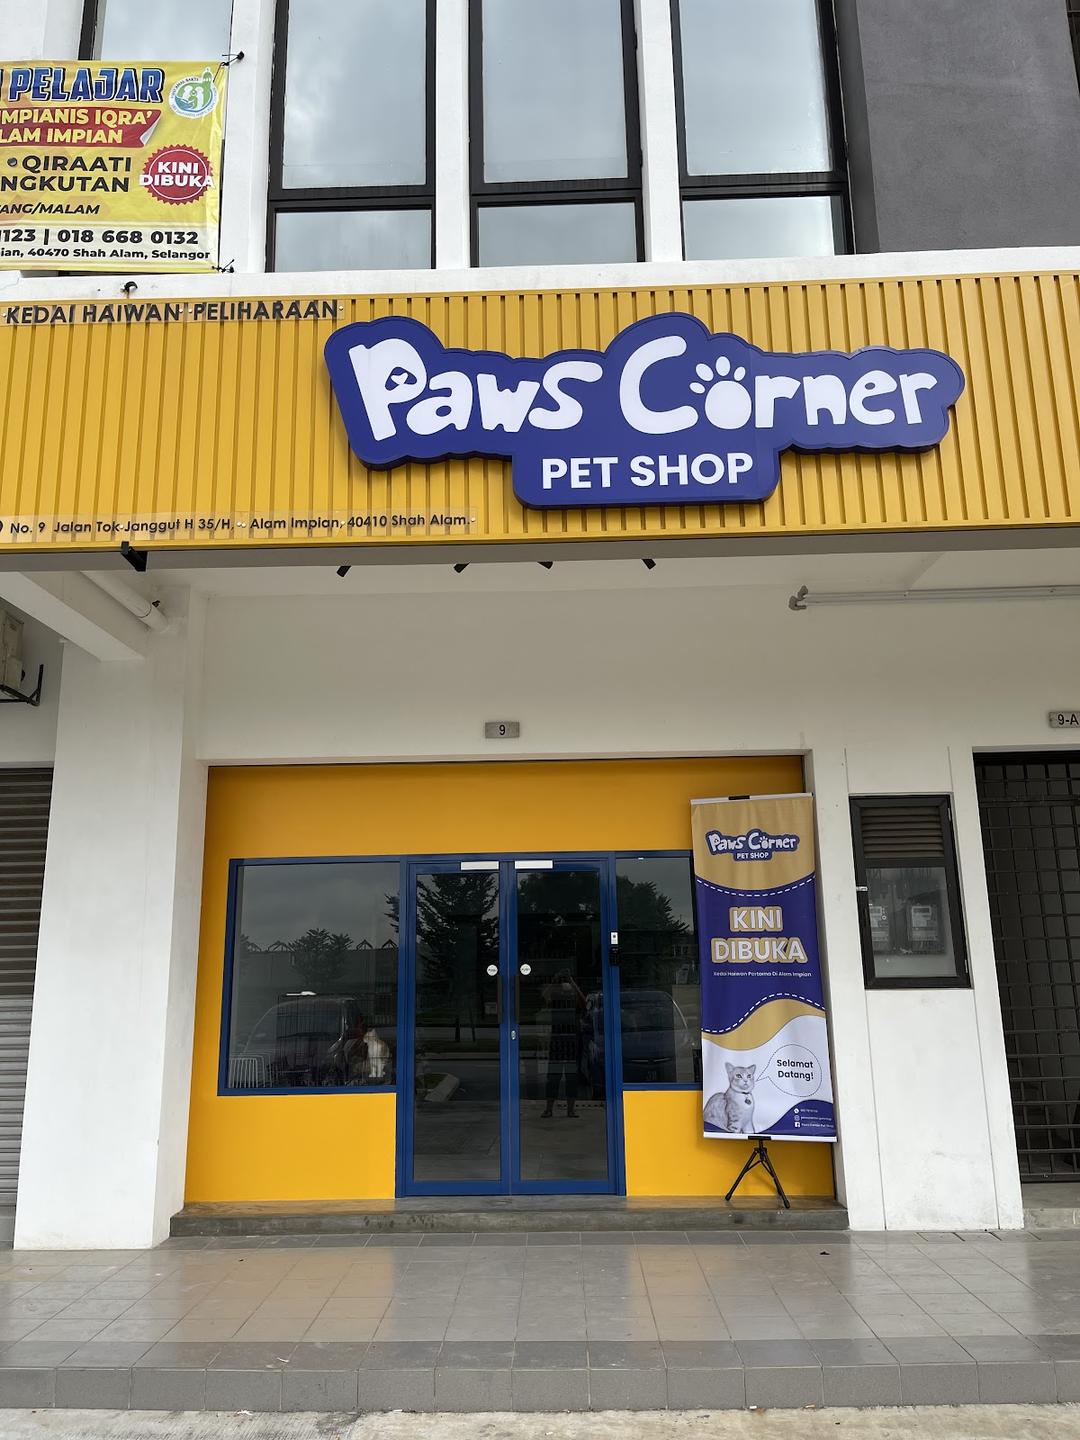 Photo of Paws Corner Pet Shop - Shah Alam, Selangor, Malaysia